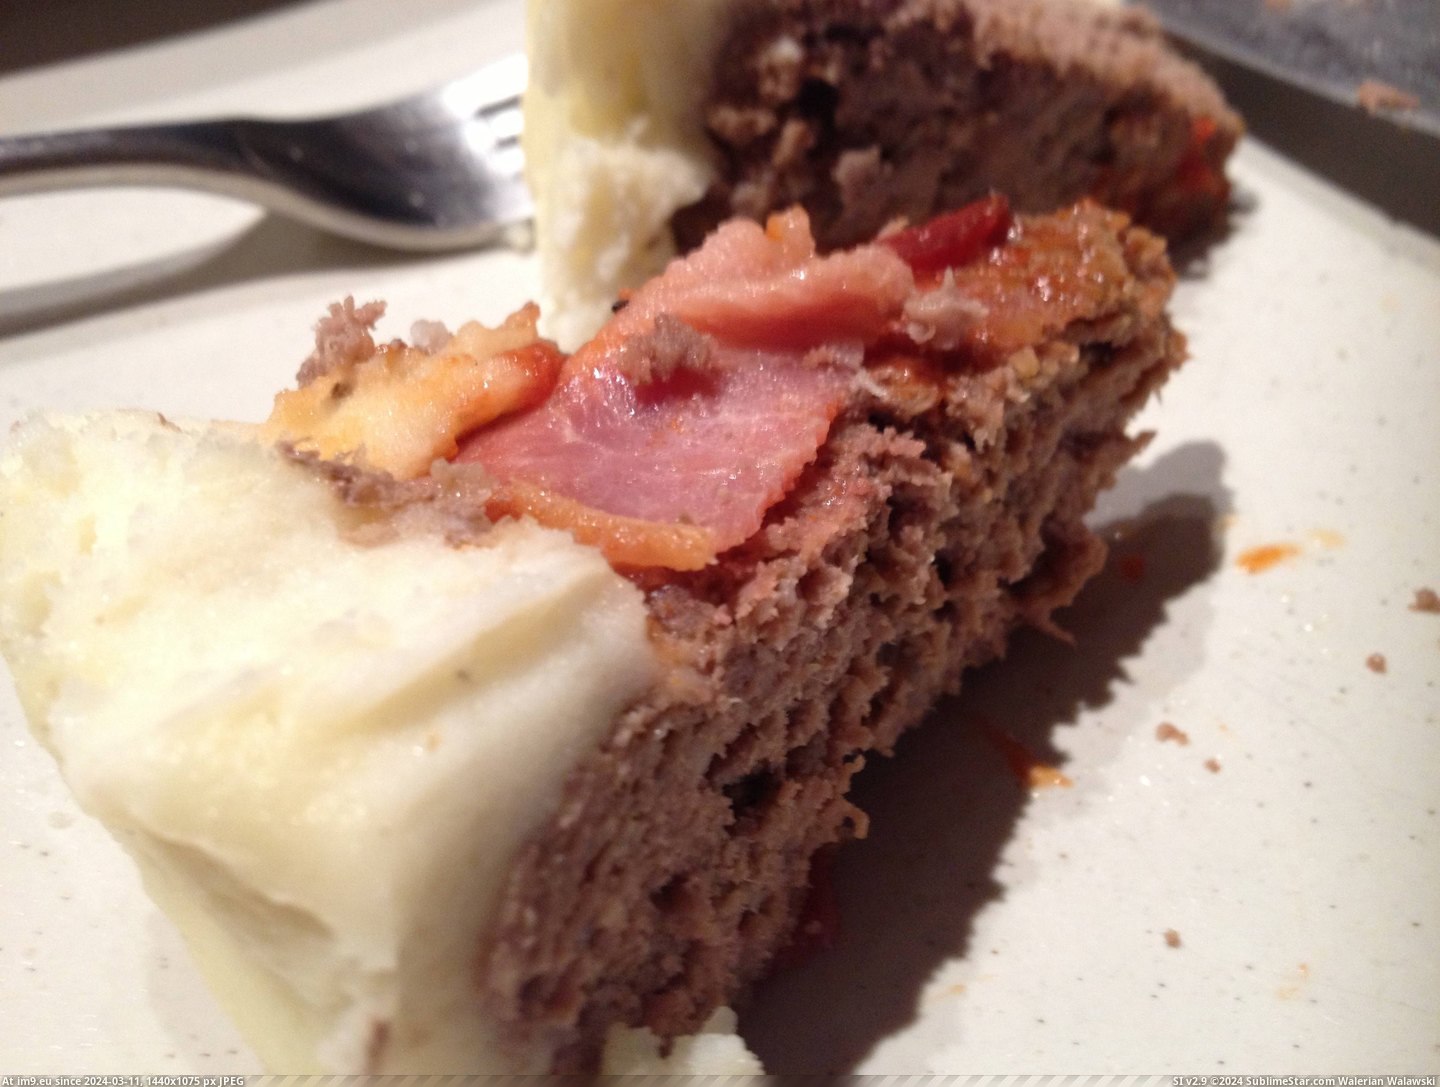  #Meatcake  [Pics] Meatcake 14 Pic. (Изображение из альбом My r/PICS favs))